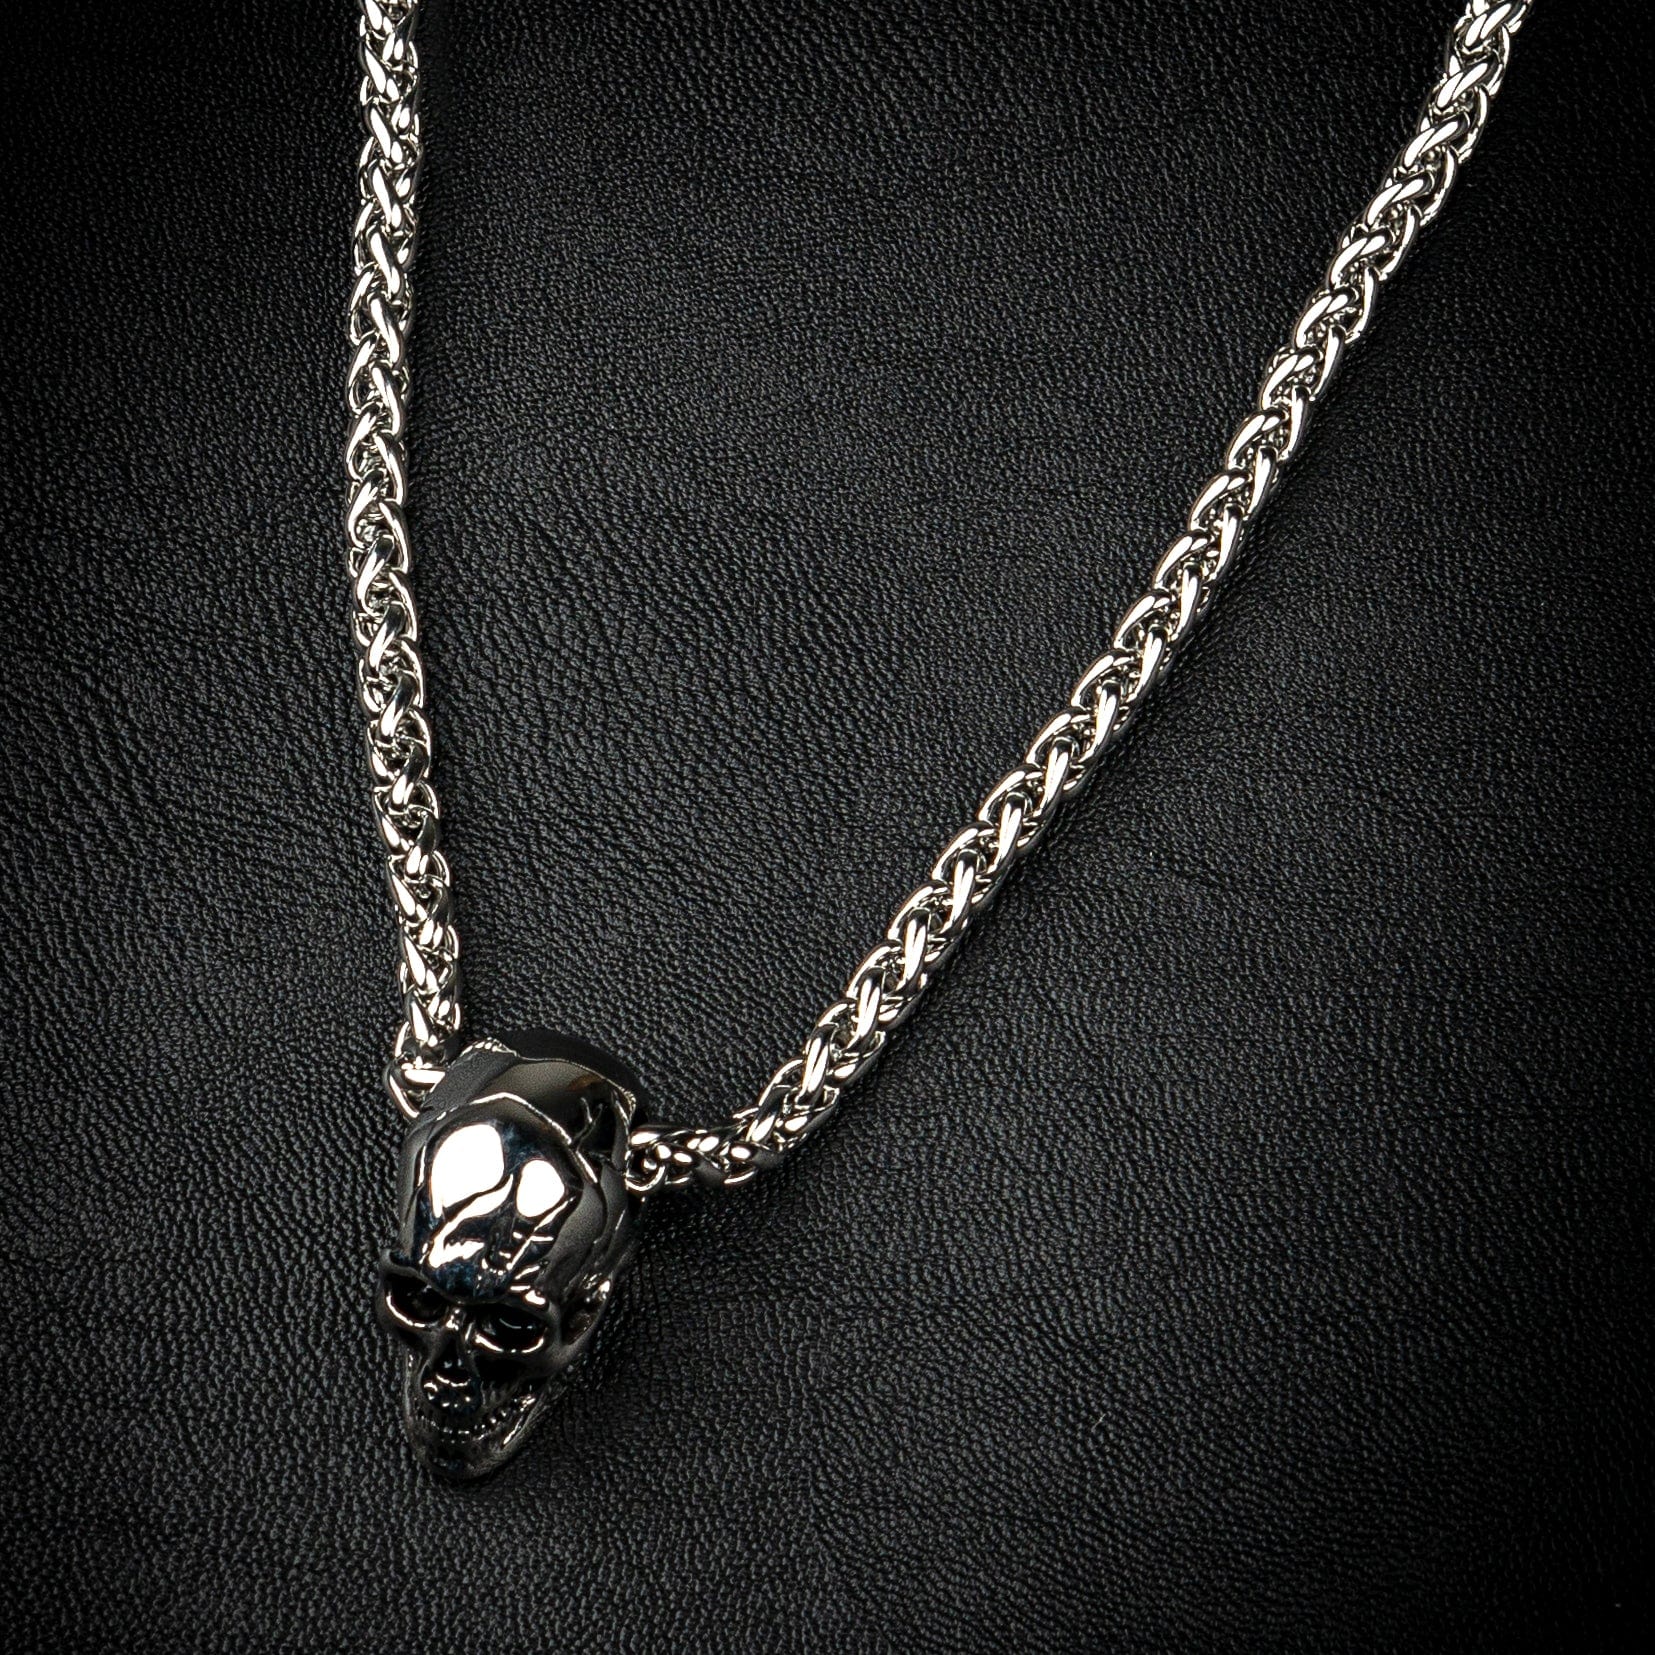 Wornstar Clothing Chain Necklace. Memento Skull Necklace